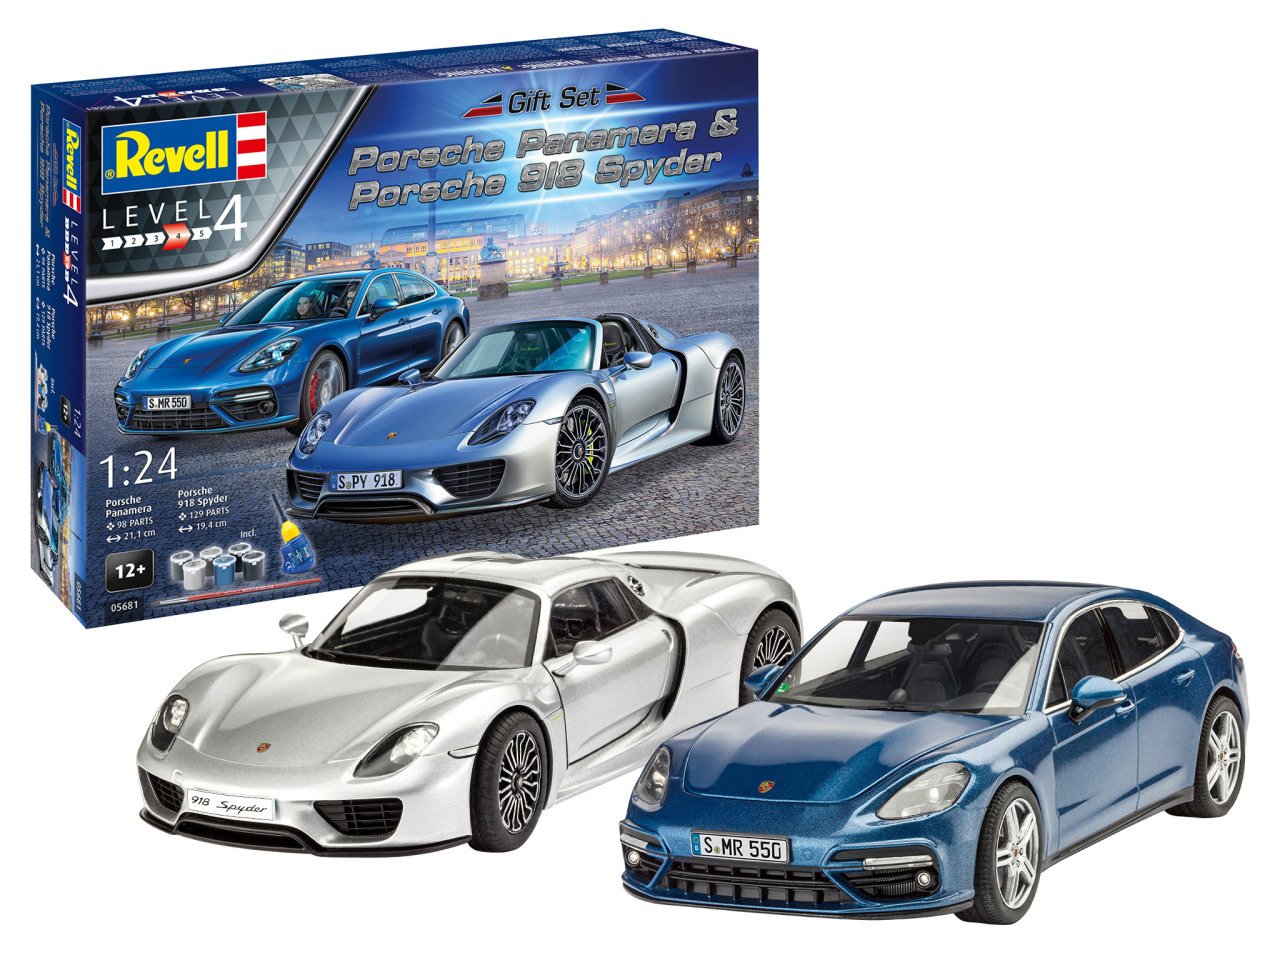 Gift Set Porsche